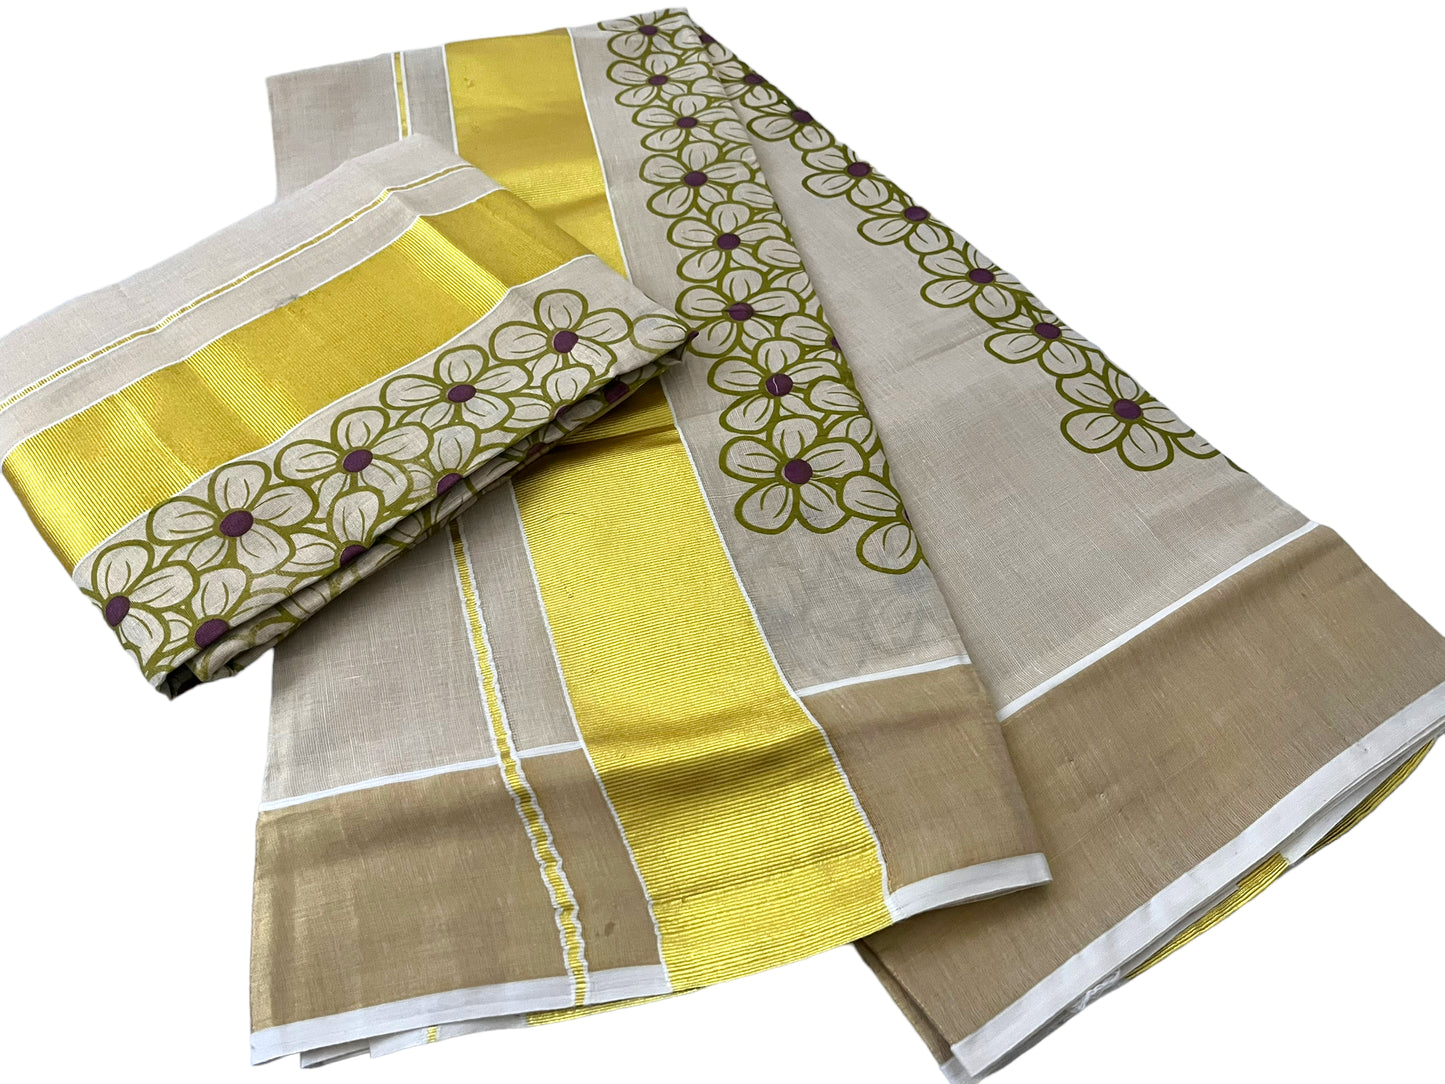 Kerala set Mundu Gold Olive green Tissue with flower prints Onam Saree Mundum Neriyathum| Petelz|petals |Indian Kerala  Saree